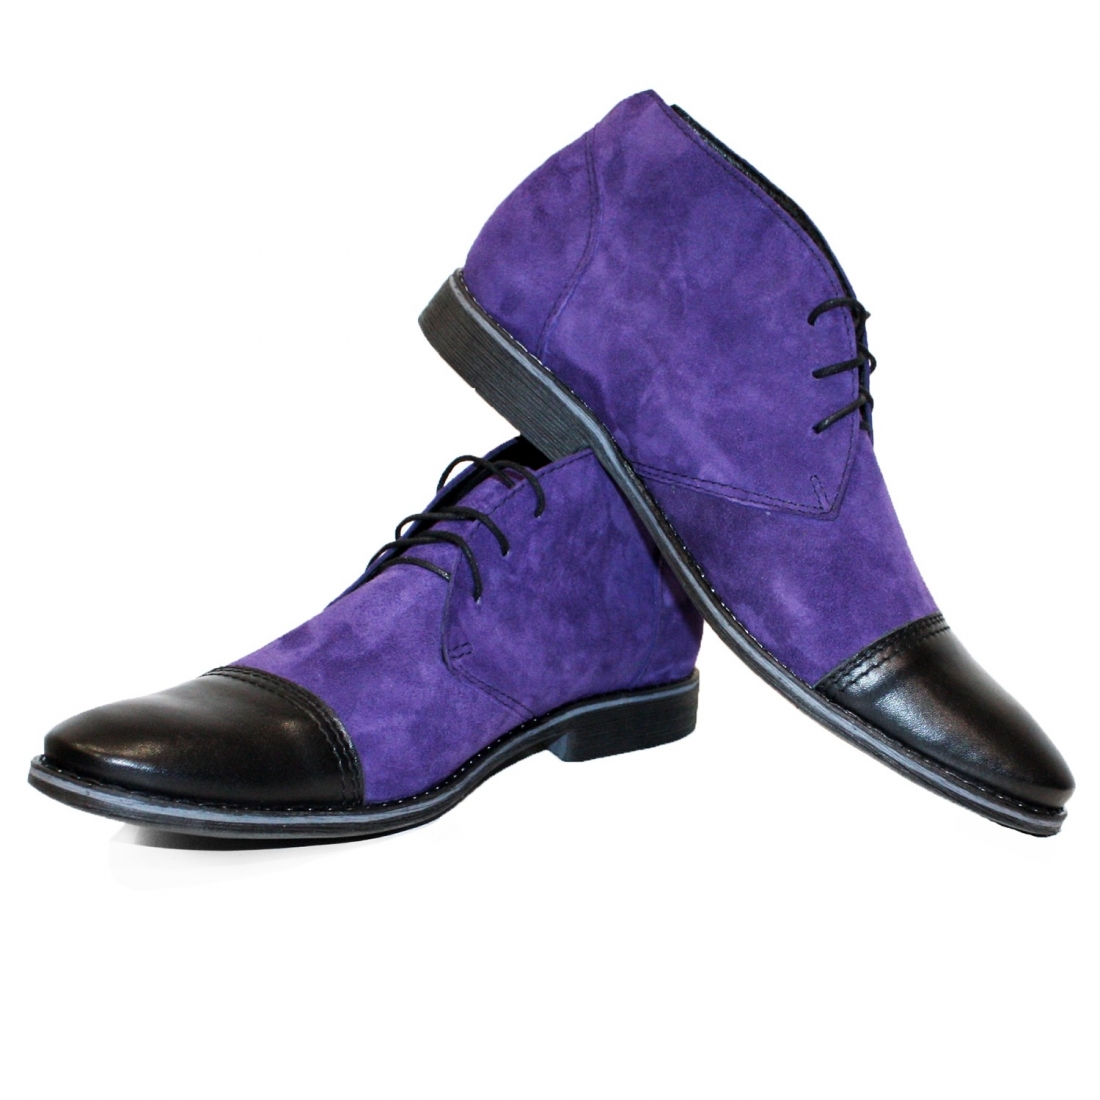 Modello Vilgero - Desert Boots - Handmade Colorful Italian Leather Shoes